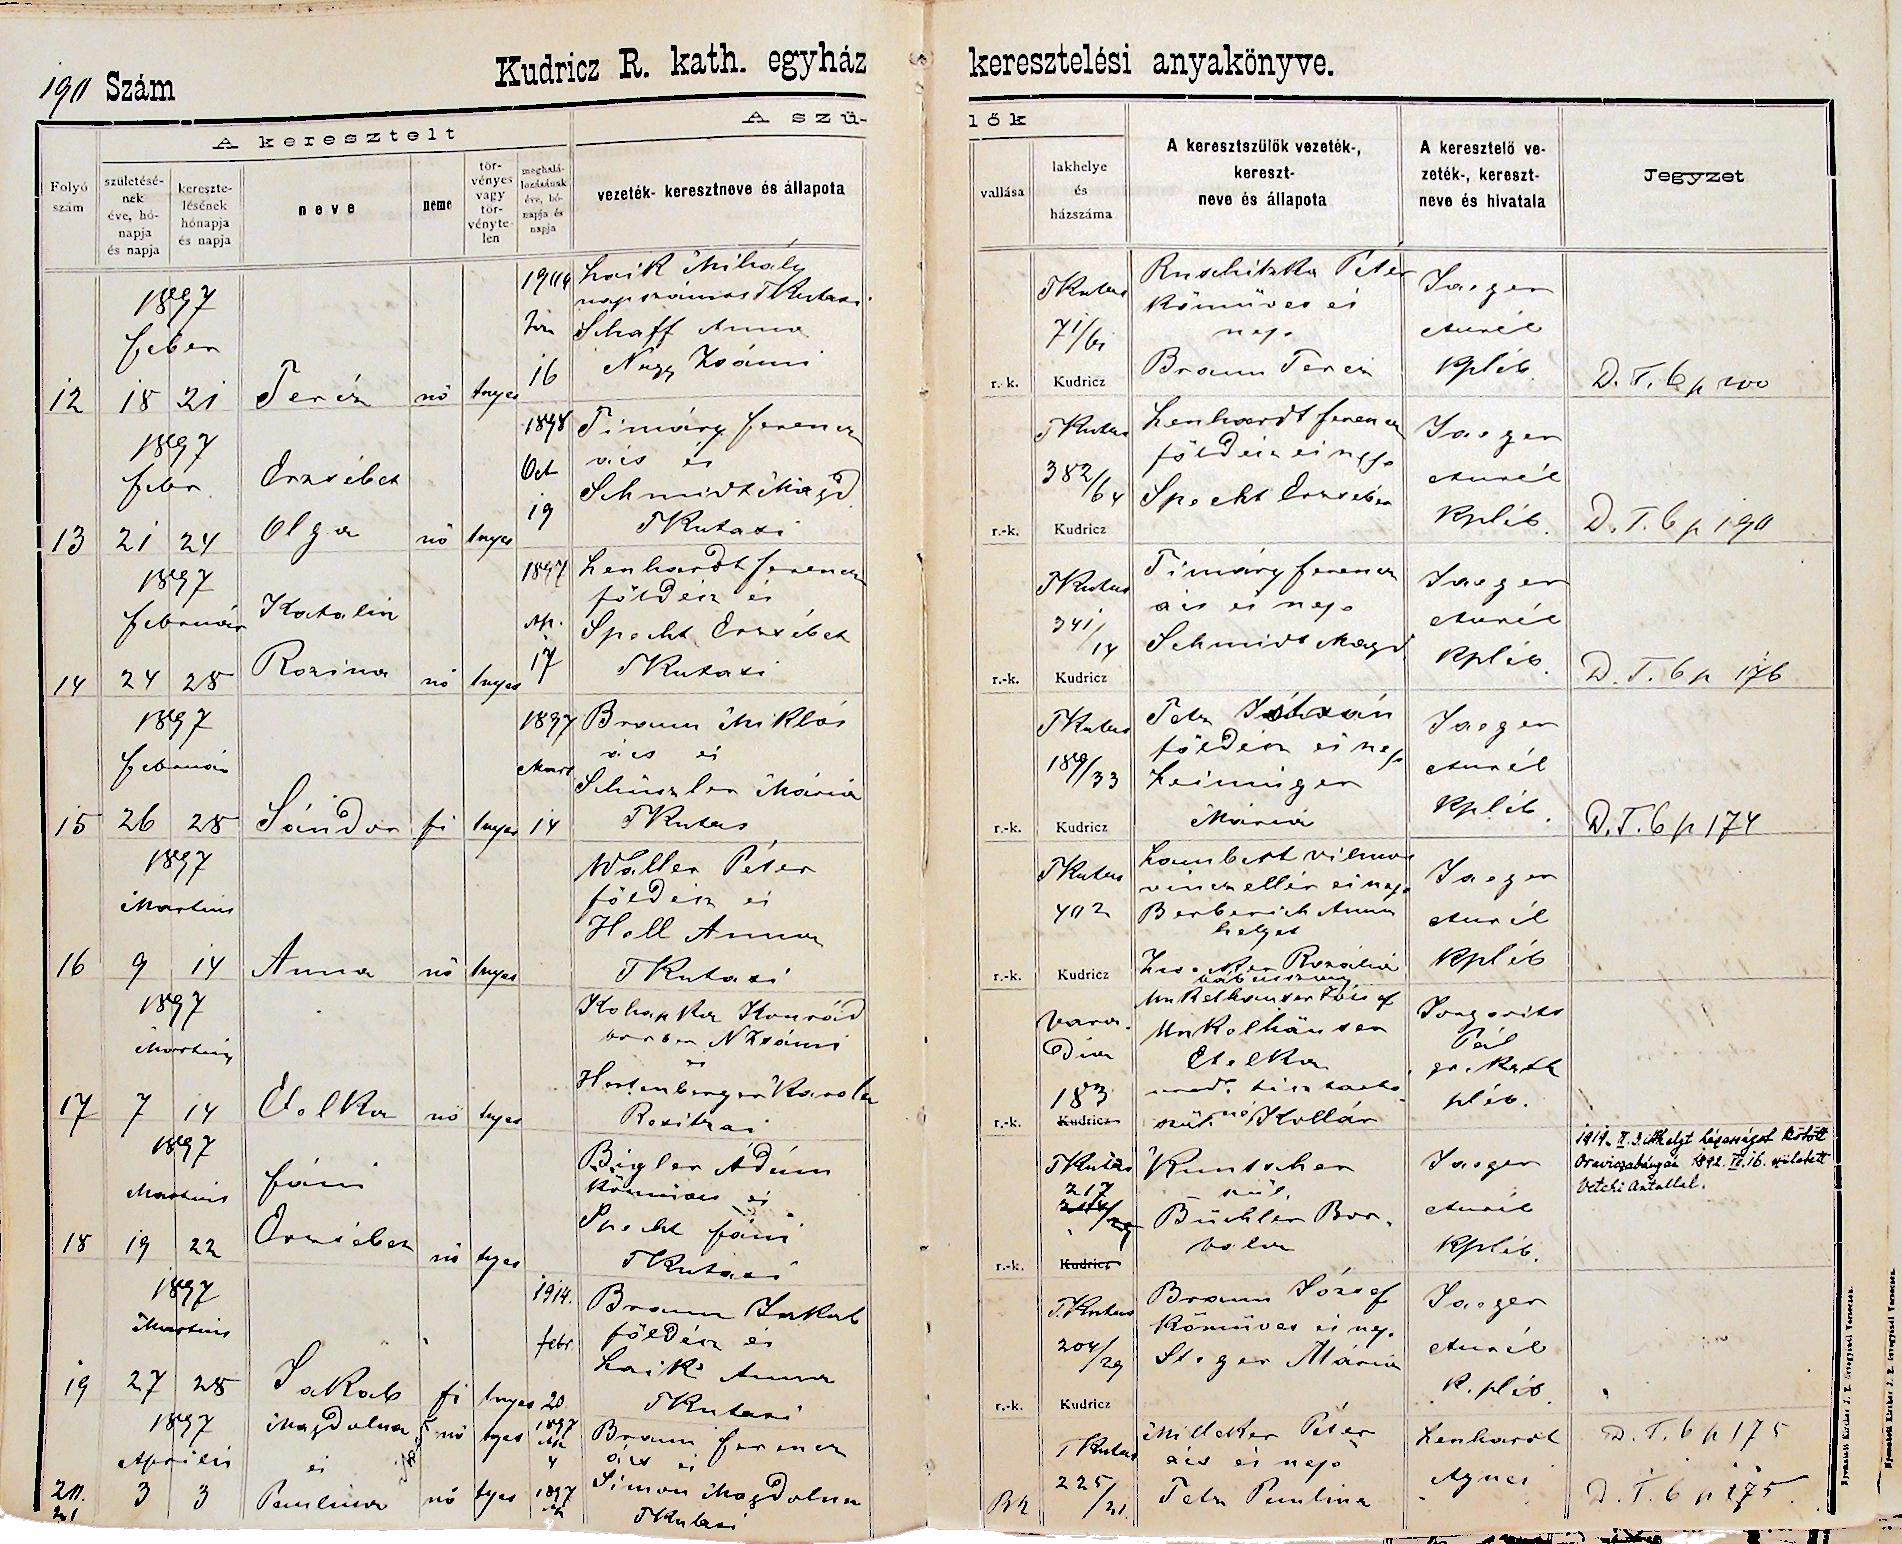 images/church_records/BIRTHS/1884-1899B/1897/190